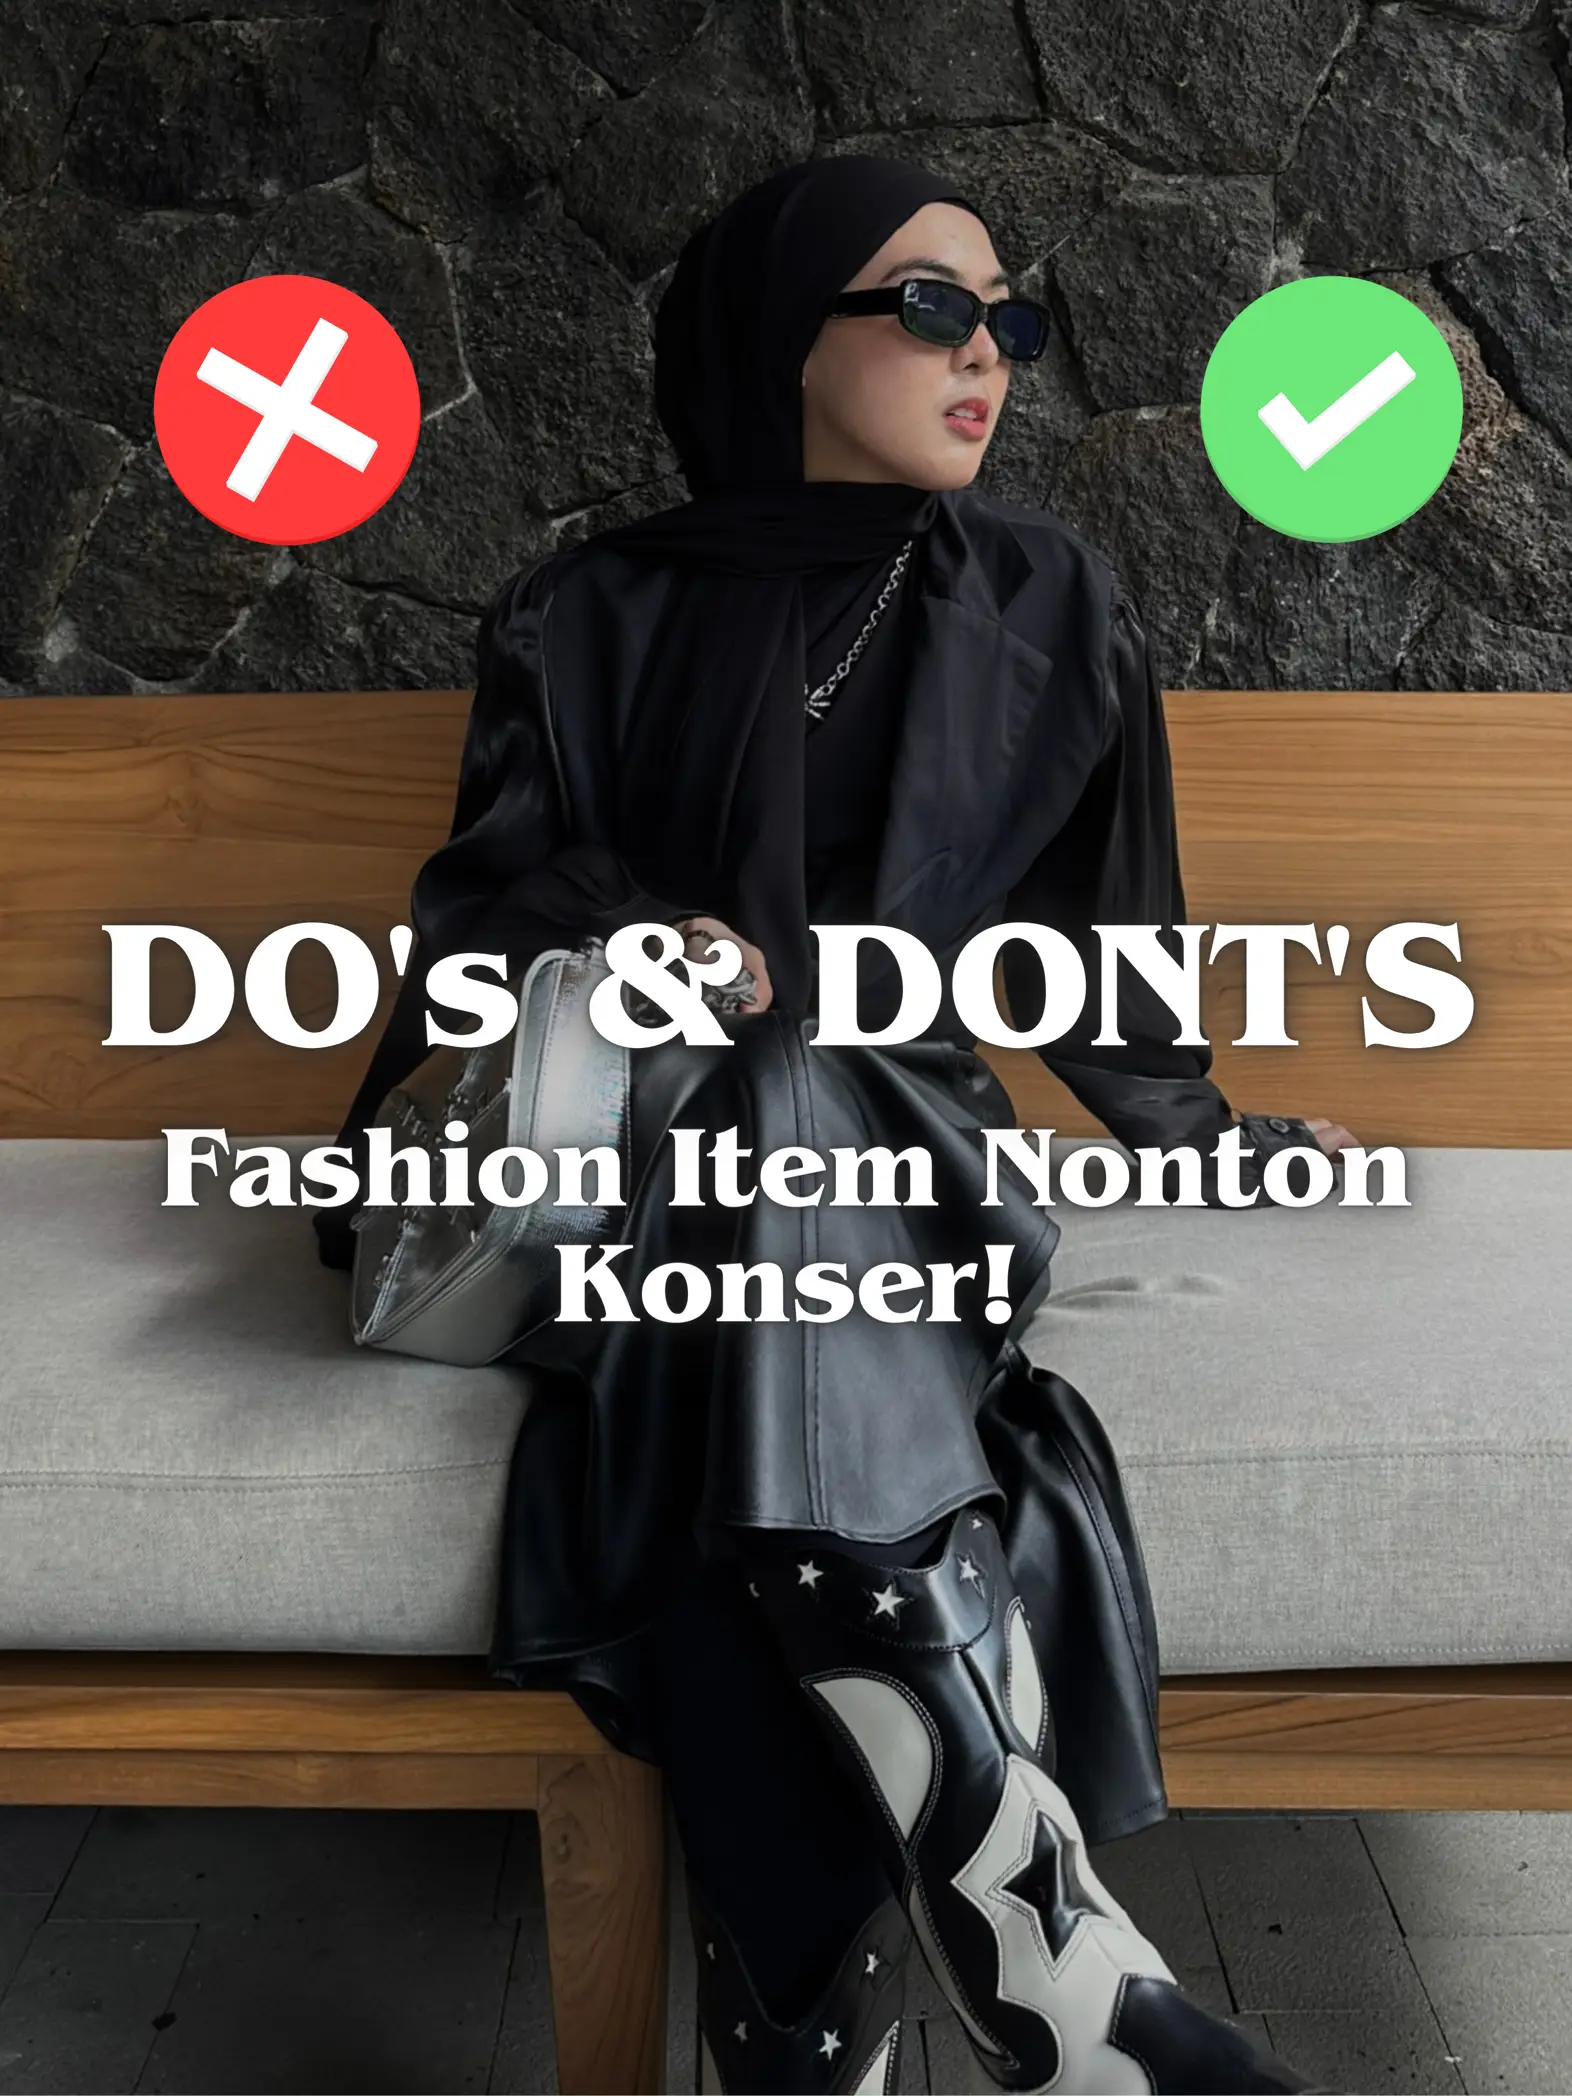 Korean aesthetic - Inspirasi Outfit - Korea, Hijab, dll